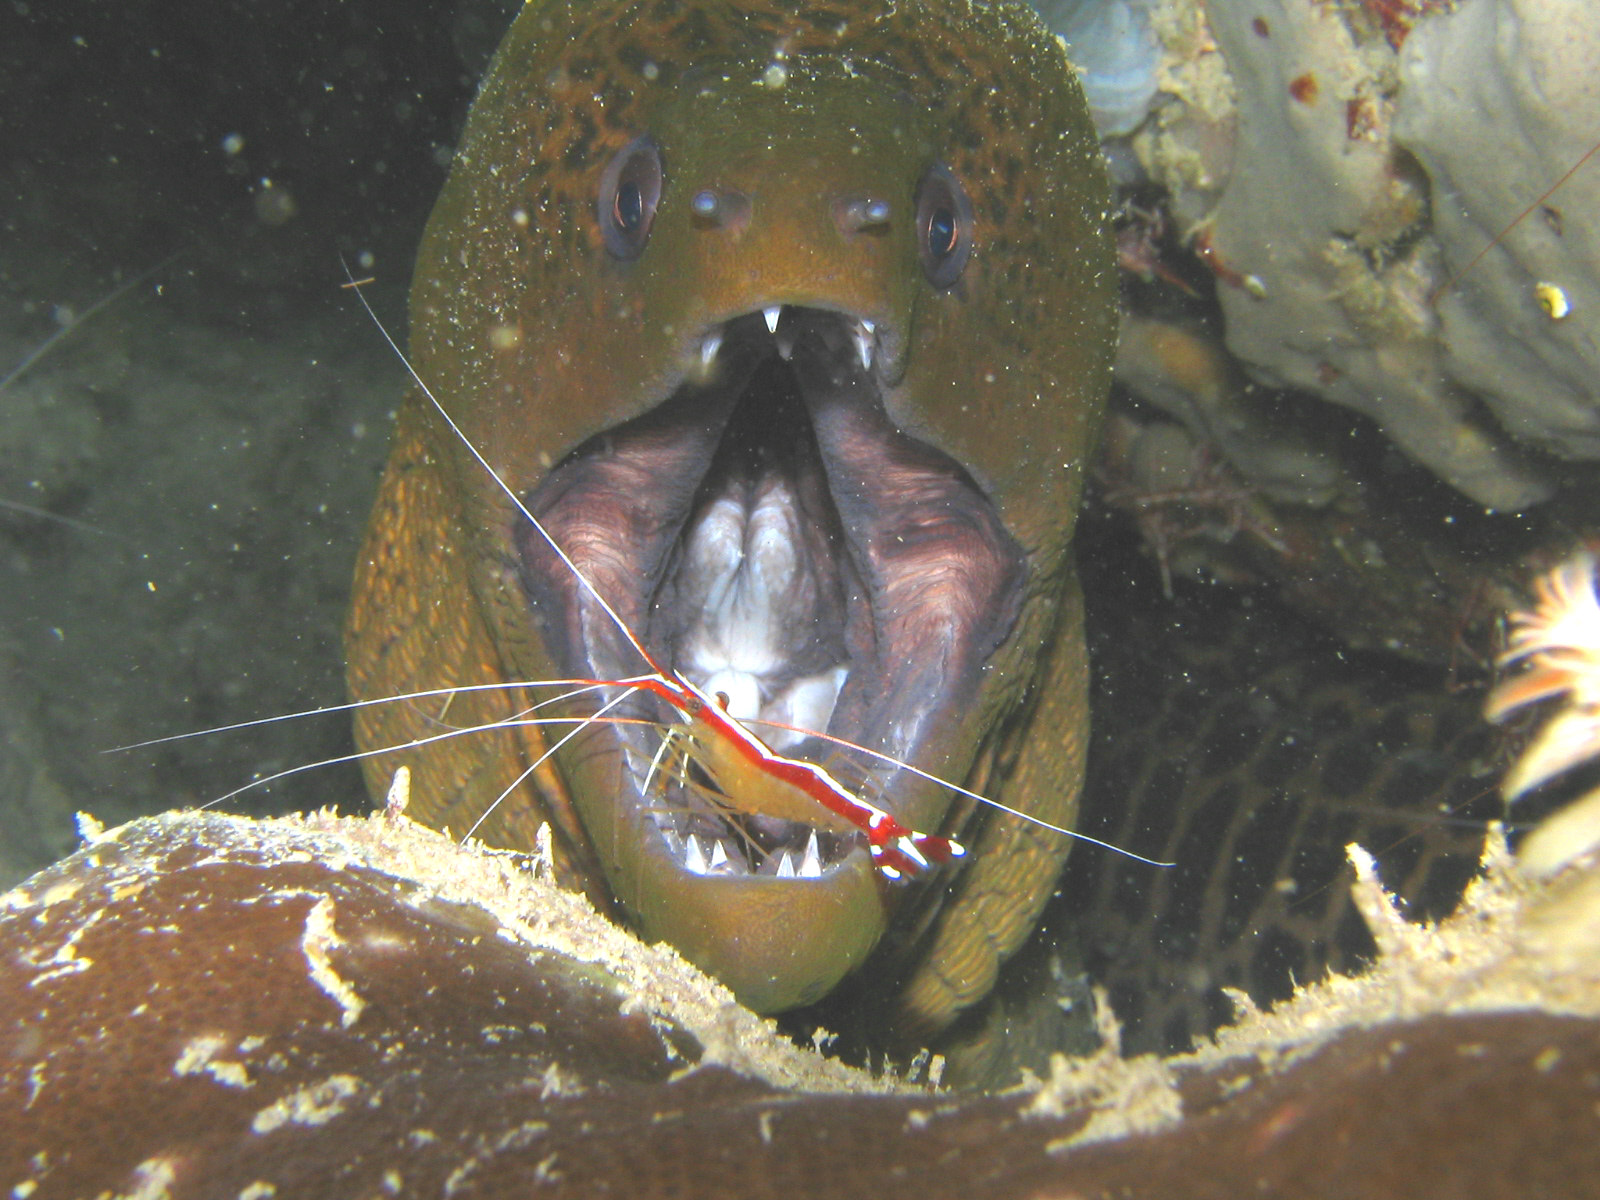 Shrimp in Eel's mouth